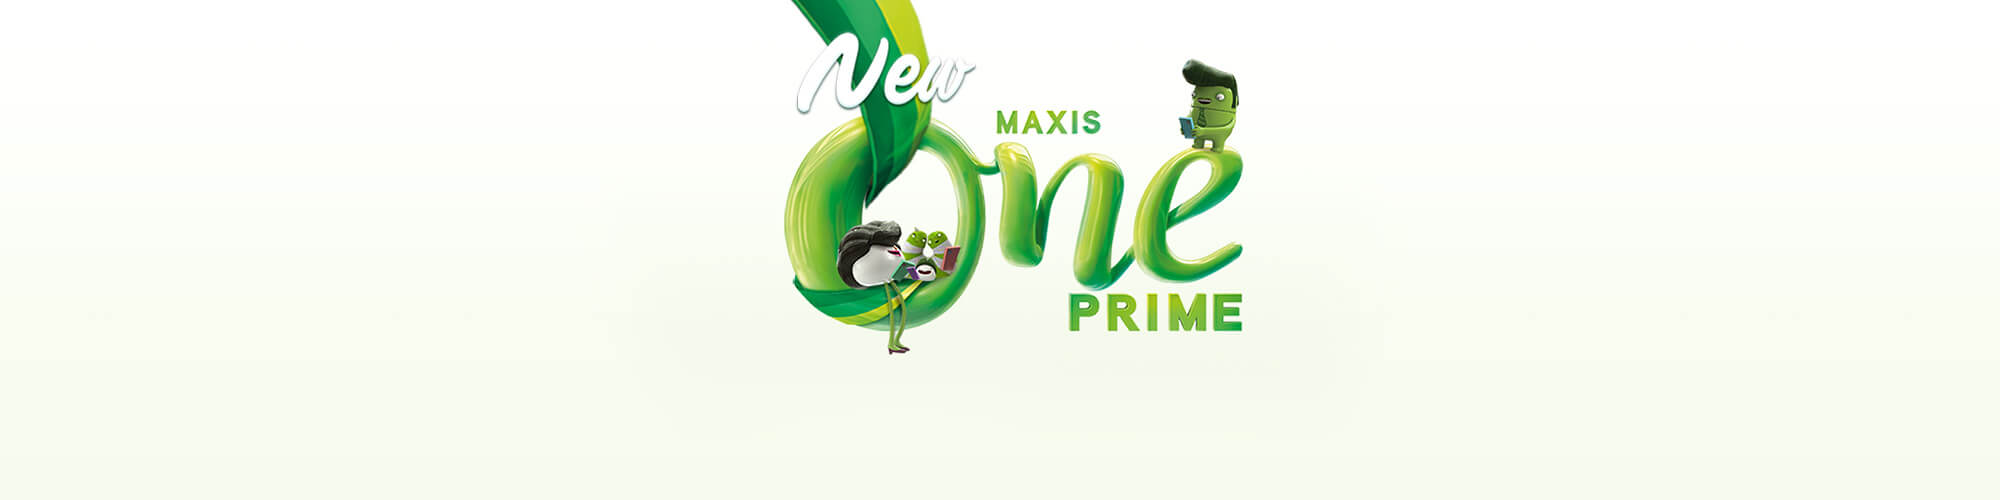 MaxisONE prime